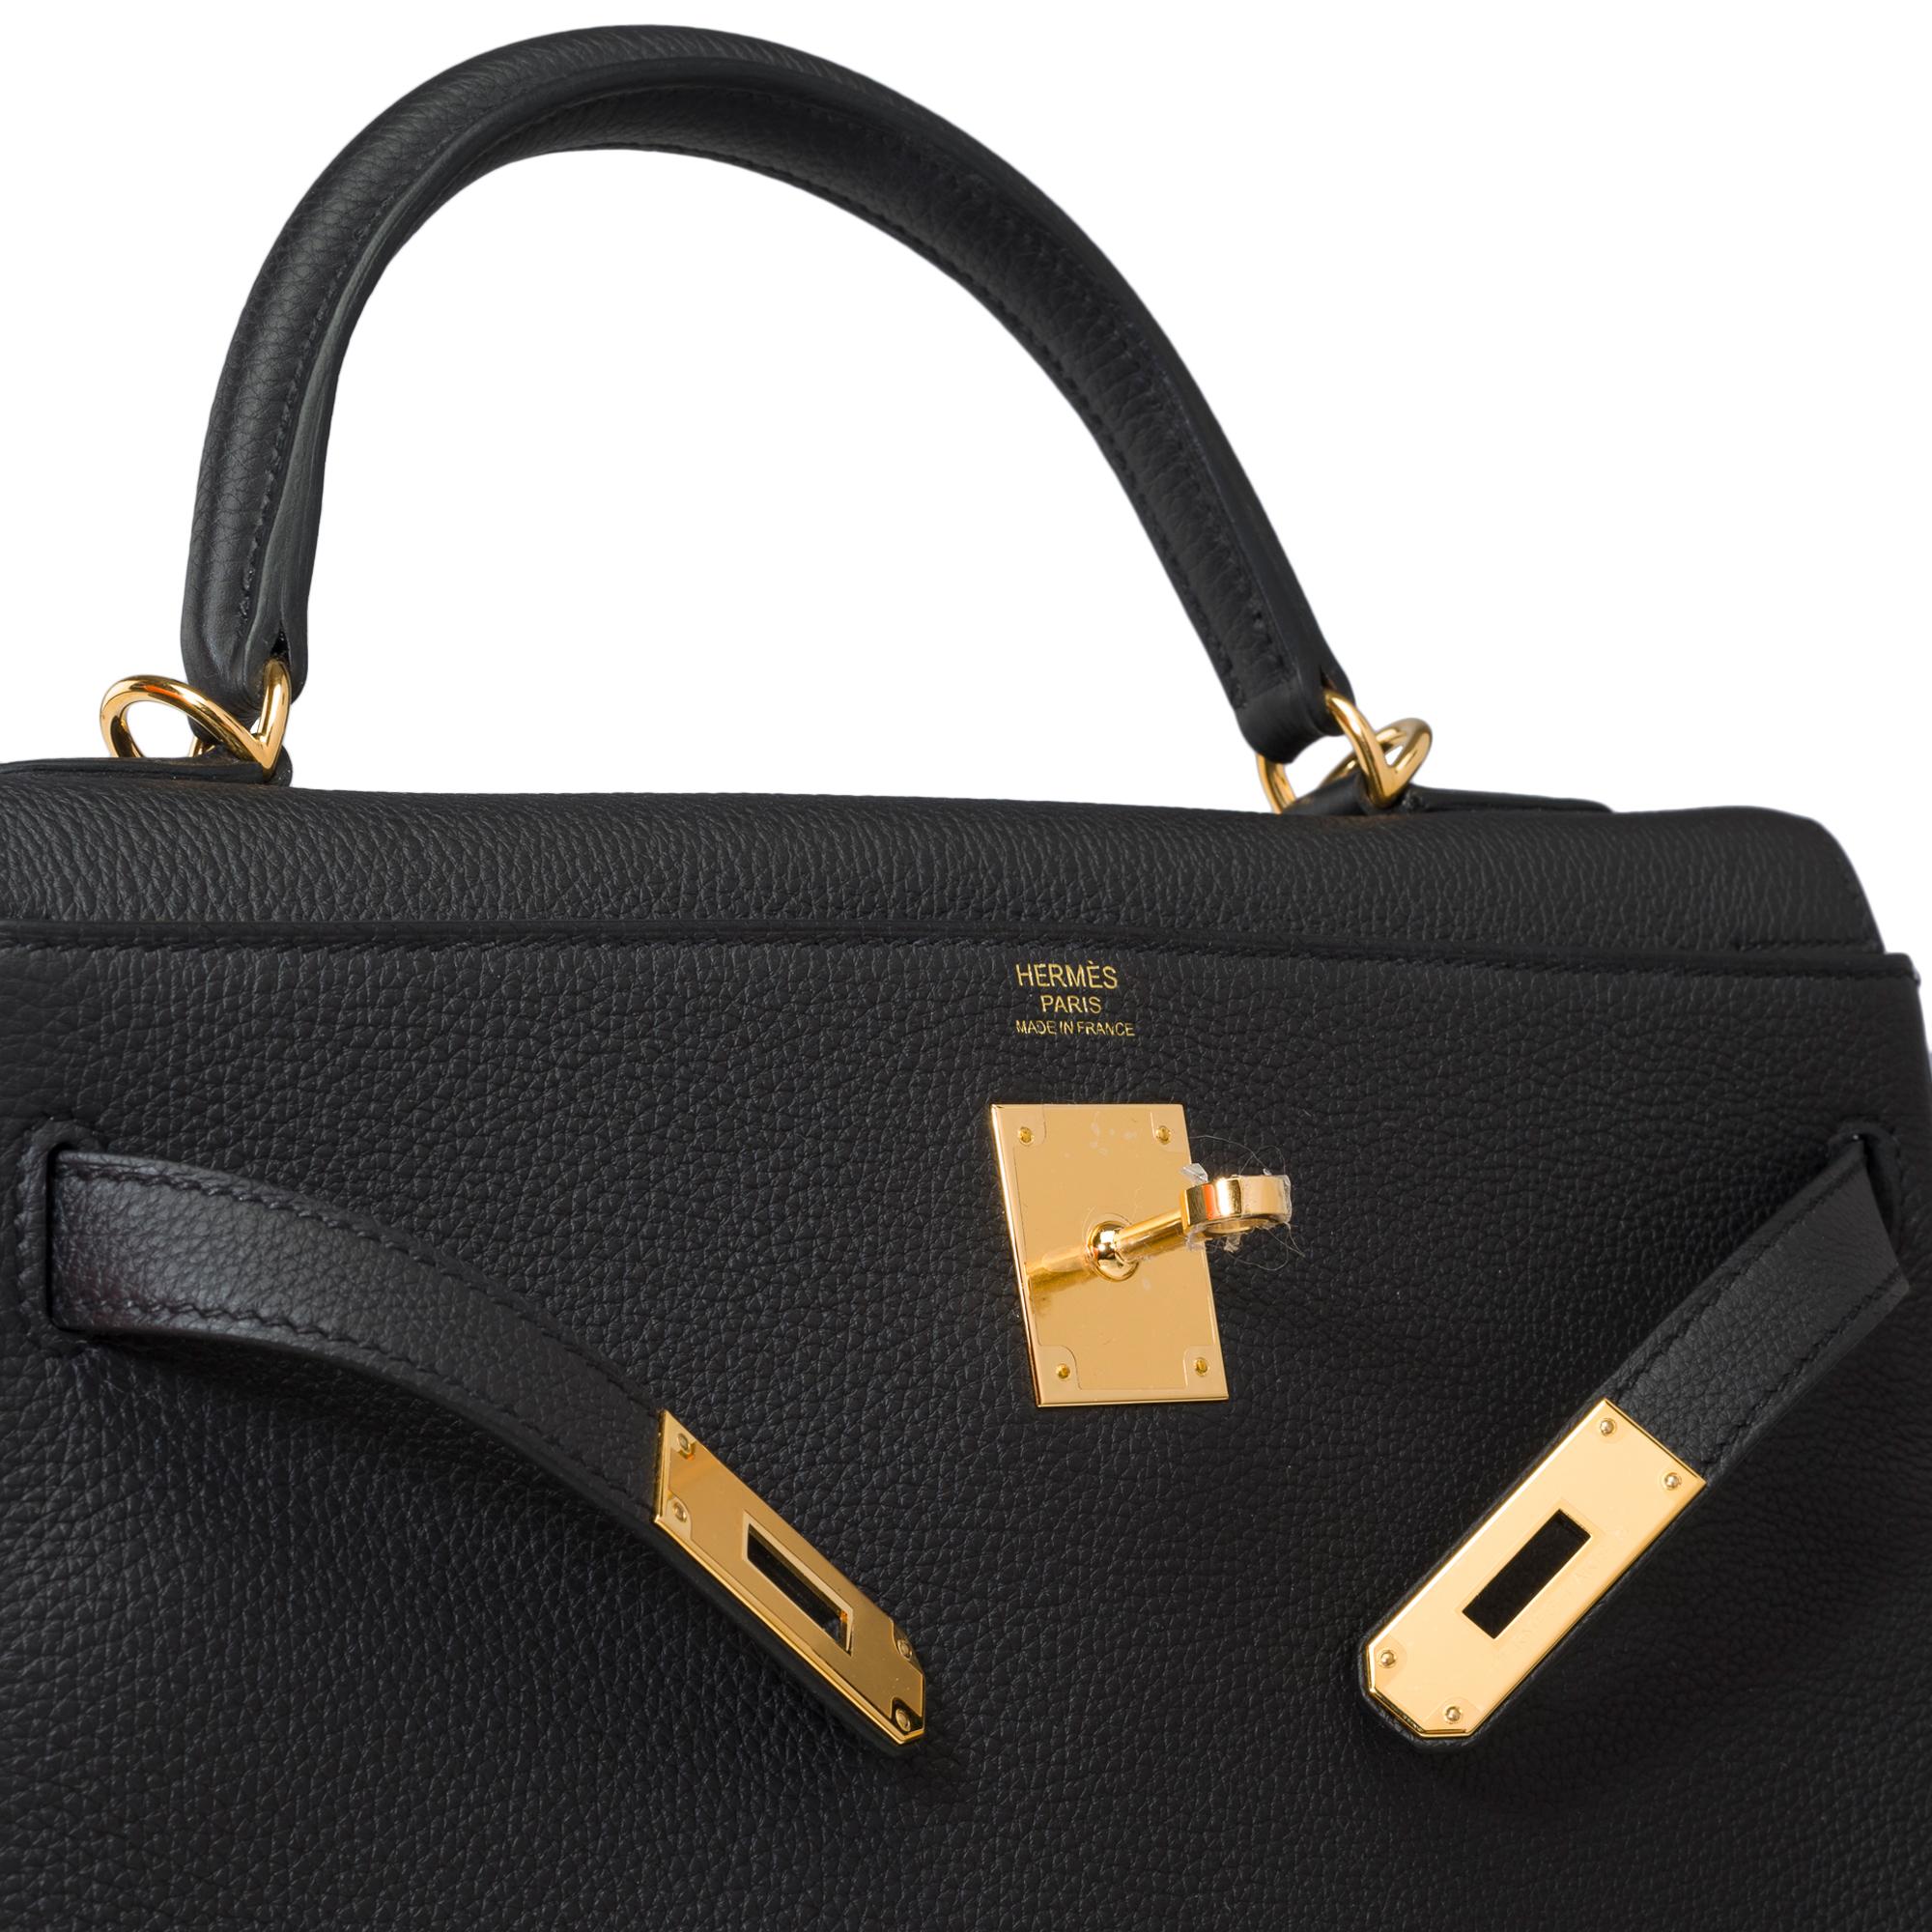 New Hermès Kelly 32 retourne handbag strap in Black Togo leather, GHW 3